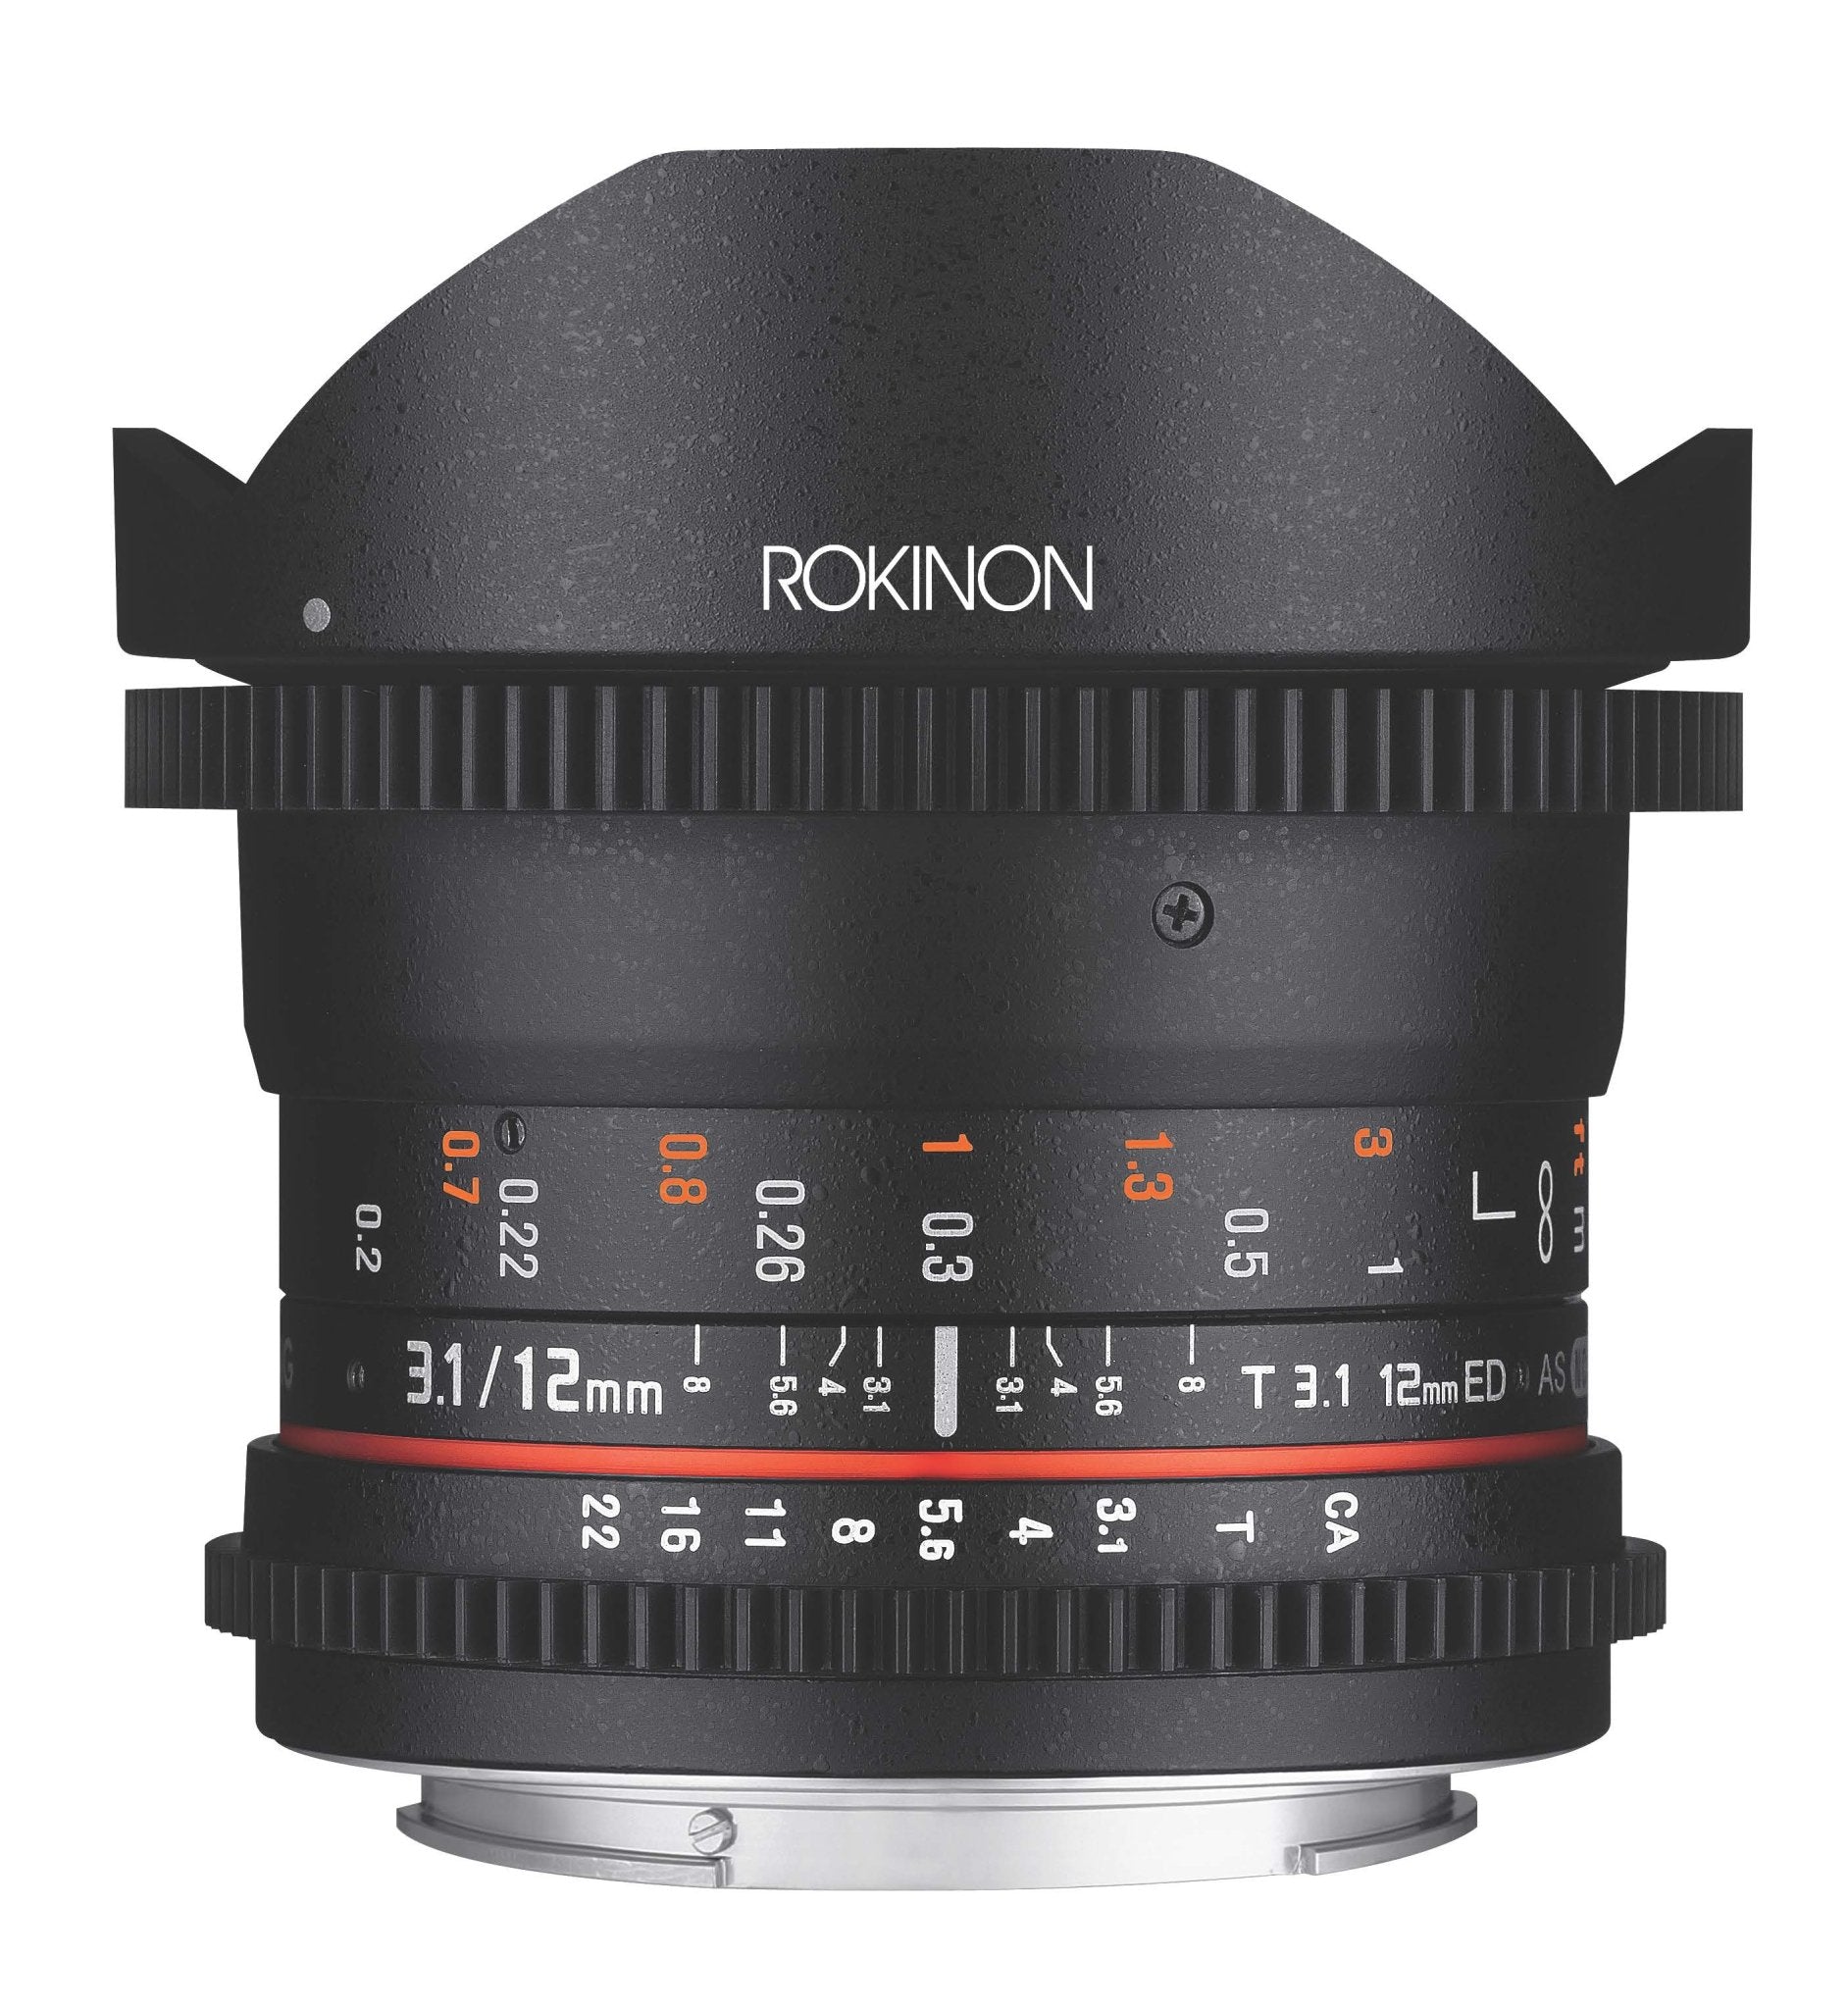 Rokinon Cine Lenses | Rokinon Cine Lens Sets